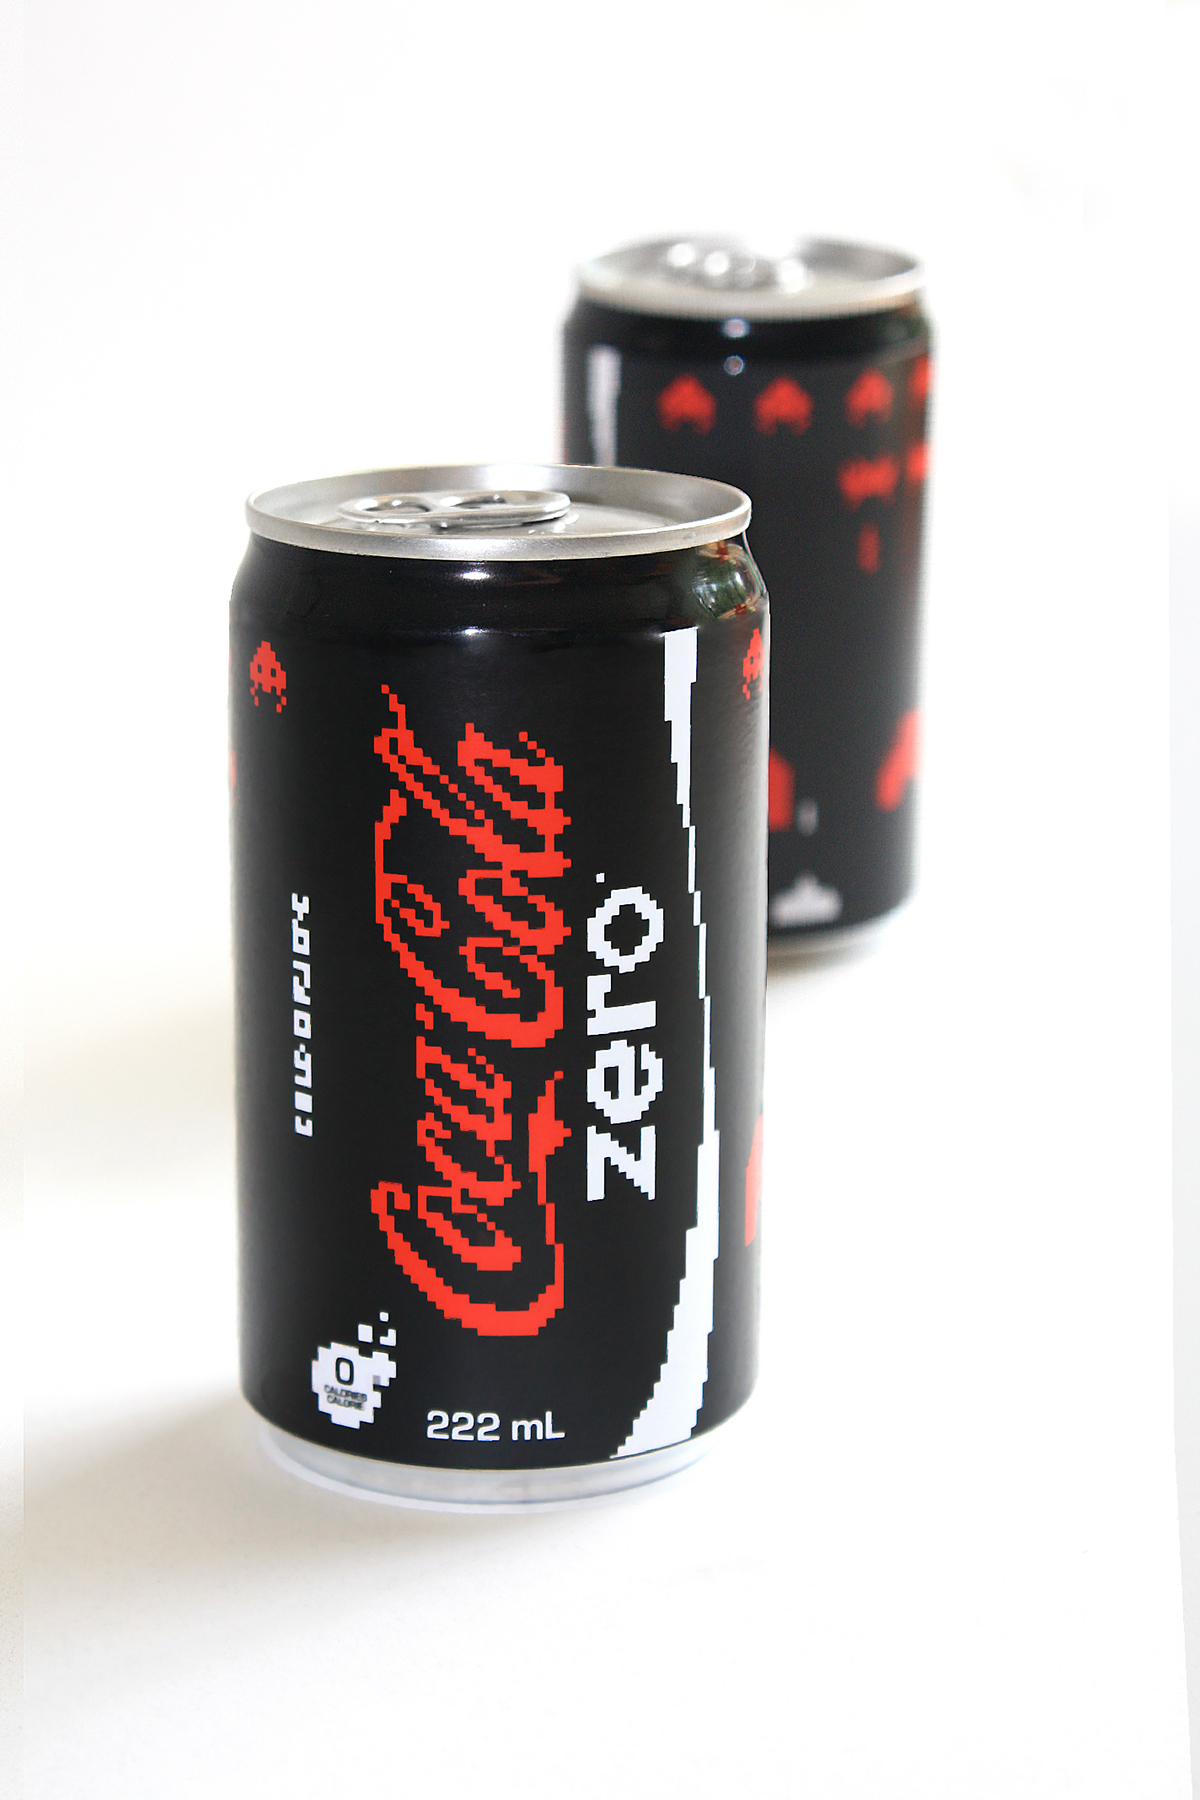 coka-cola coke diet zero package can cans pop soda beer pixel art video game